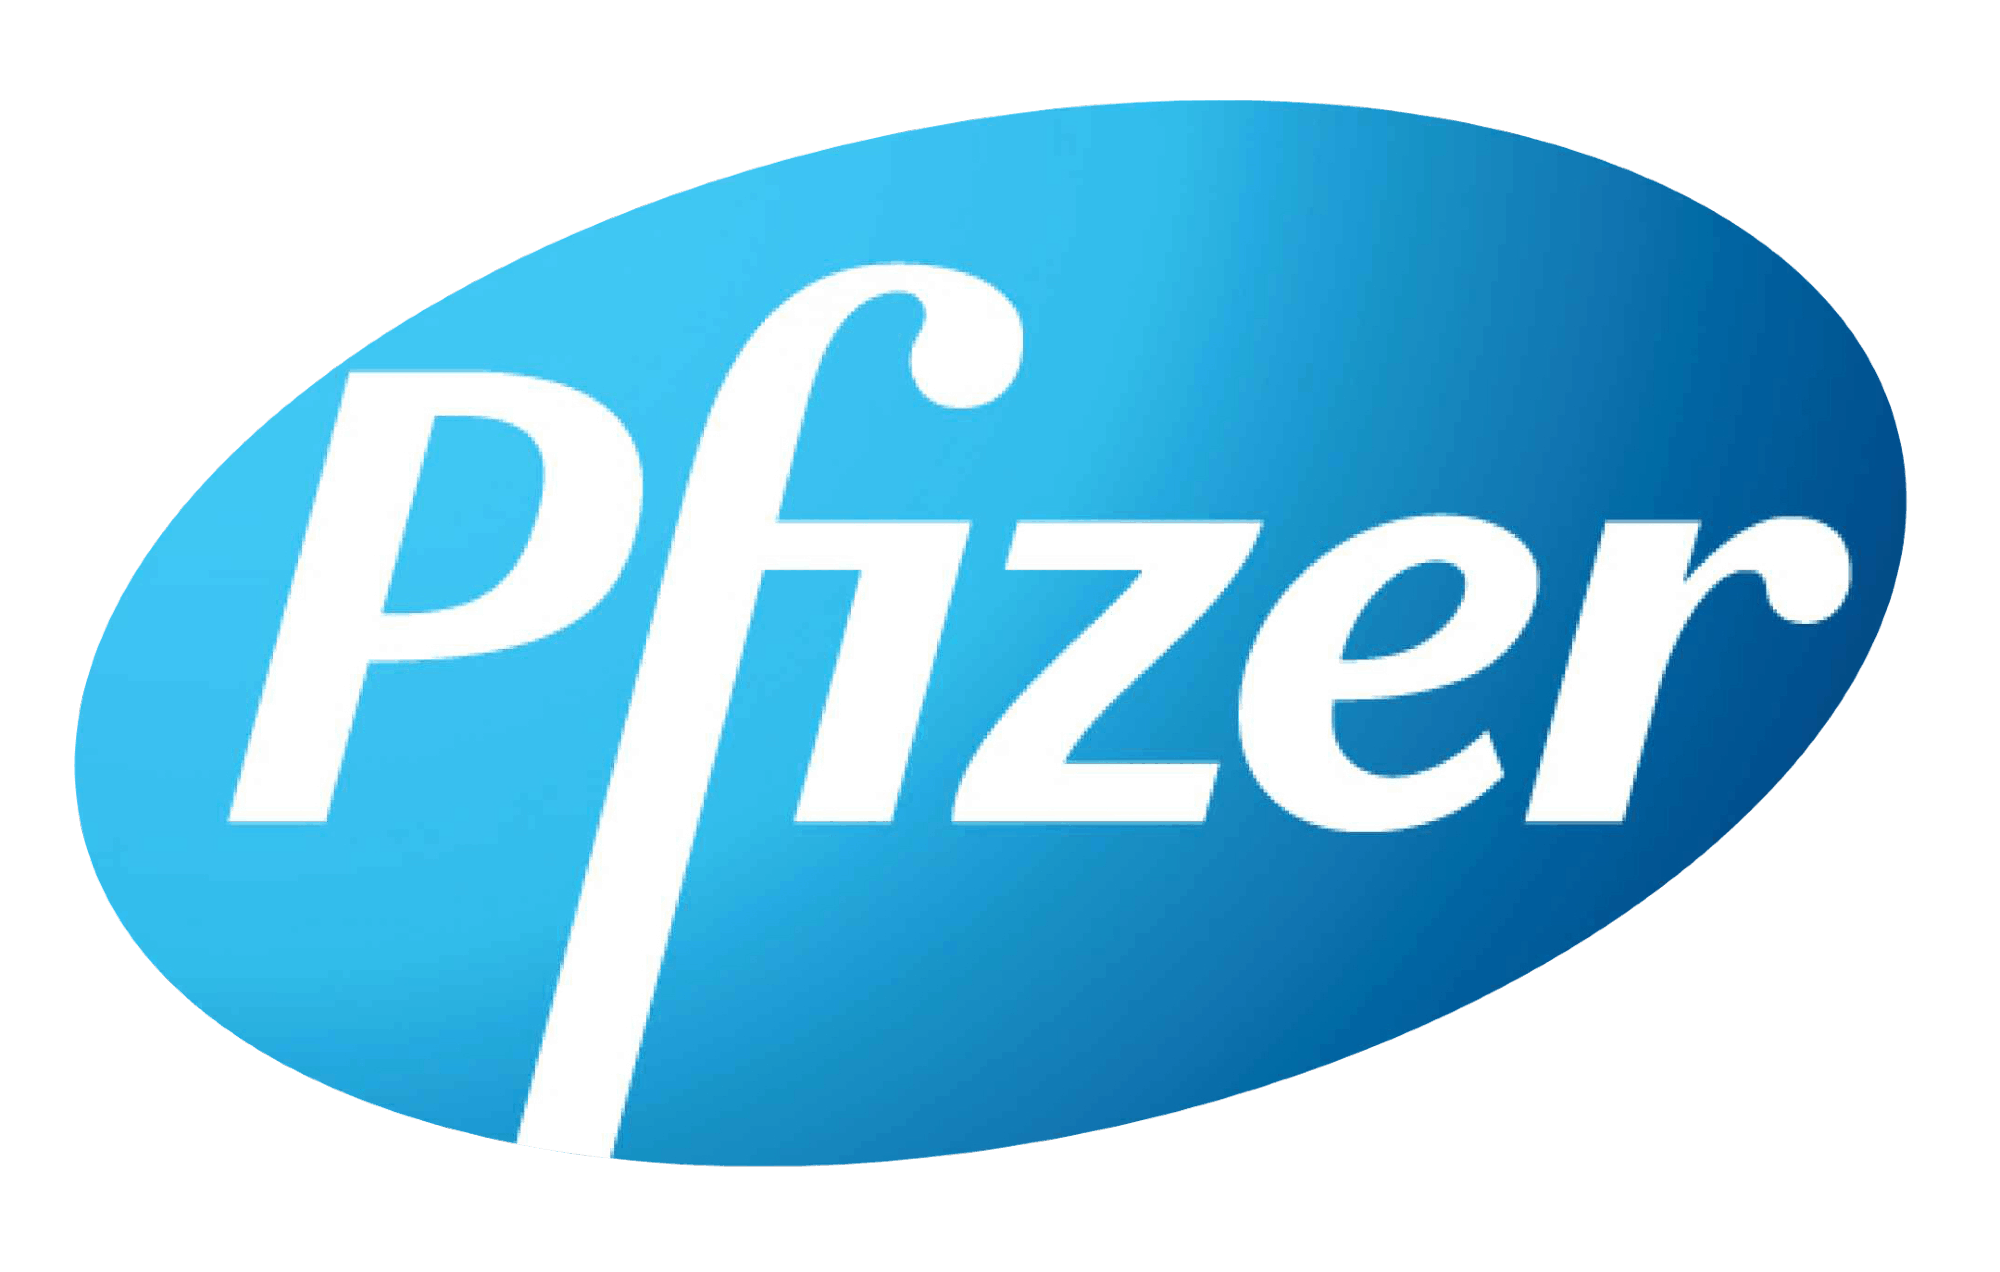 pfizer logo (1)